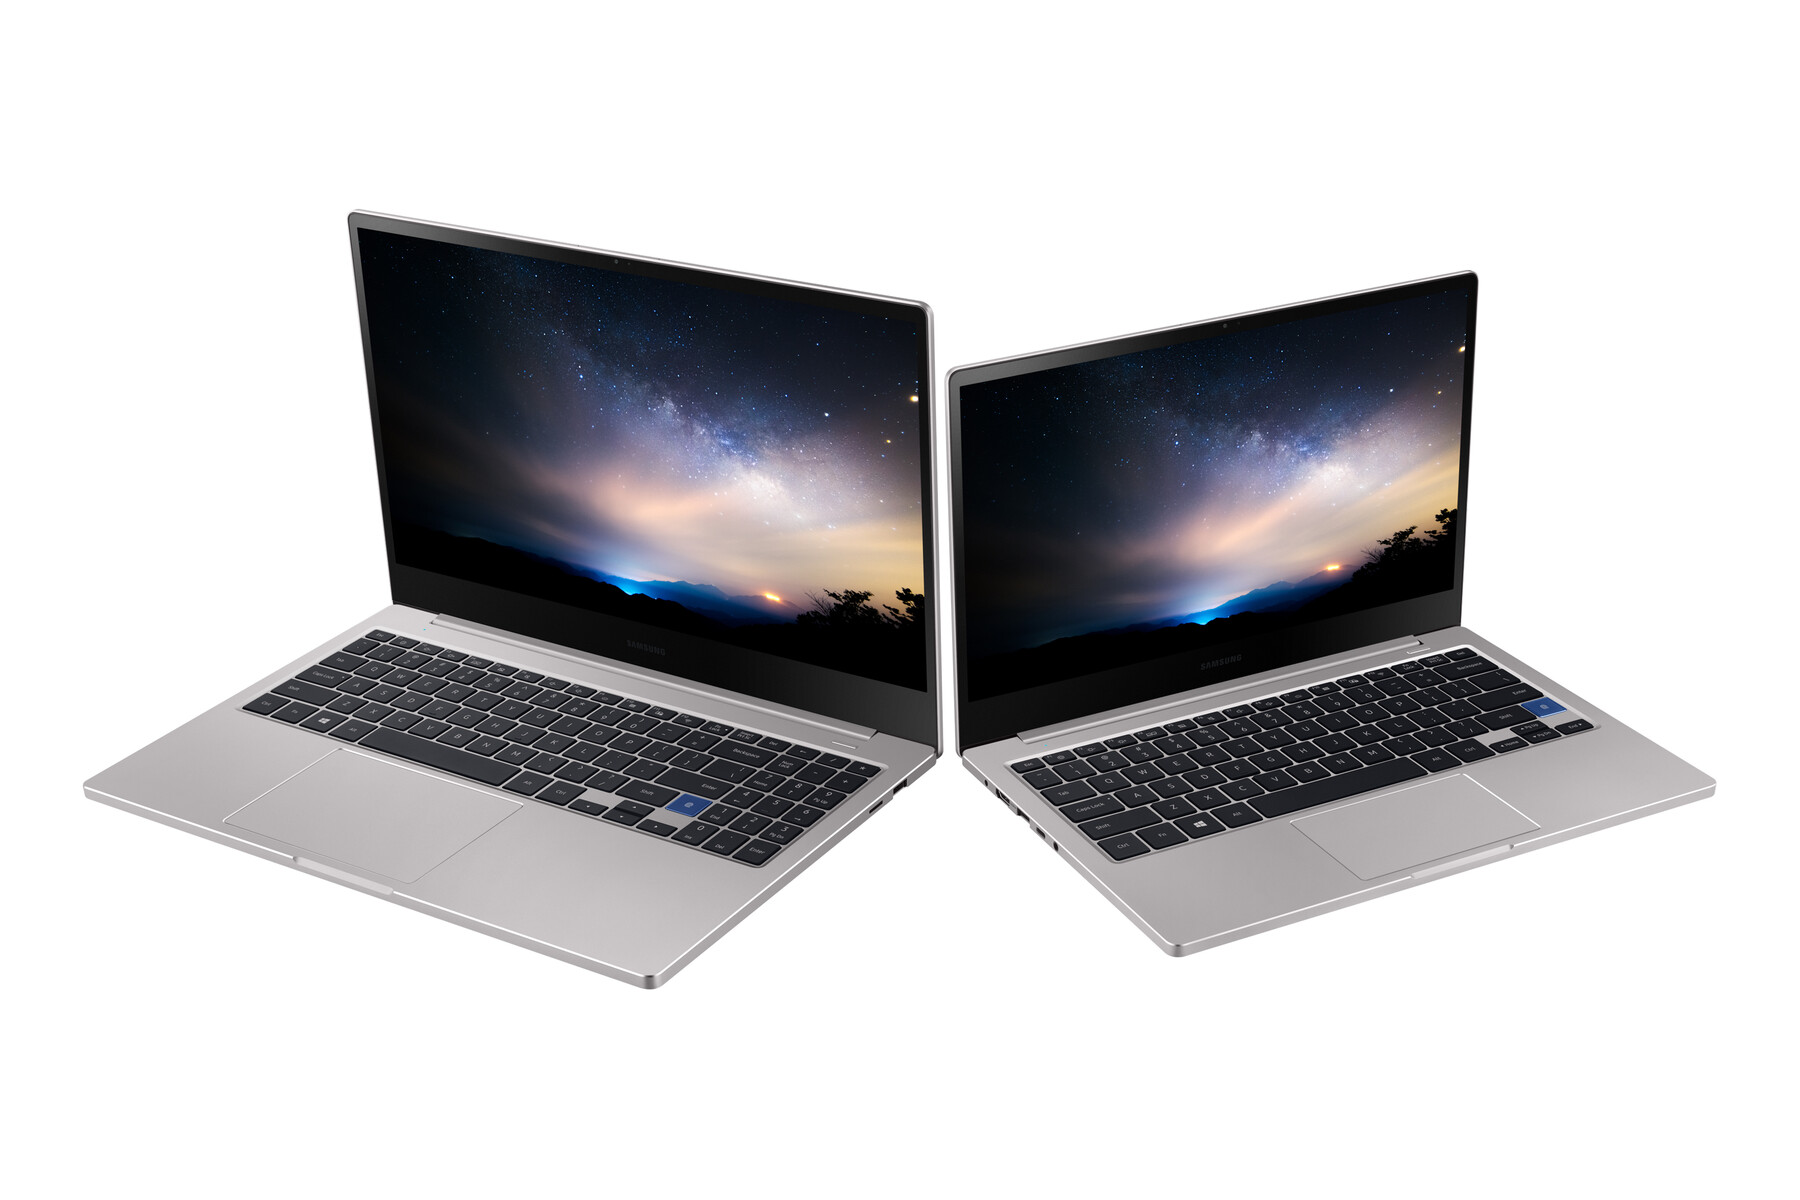 unveils new Notebook / Force laptops - NotebookCheck.net News